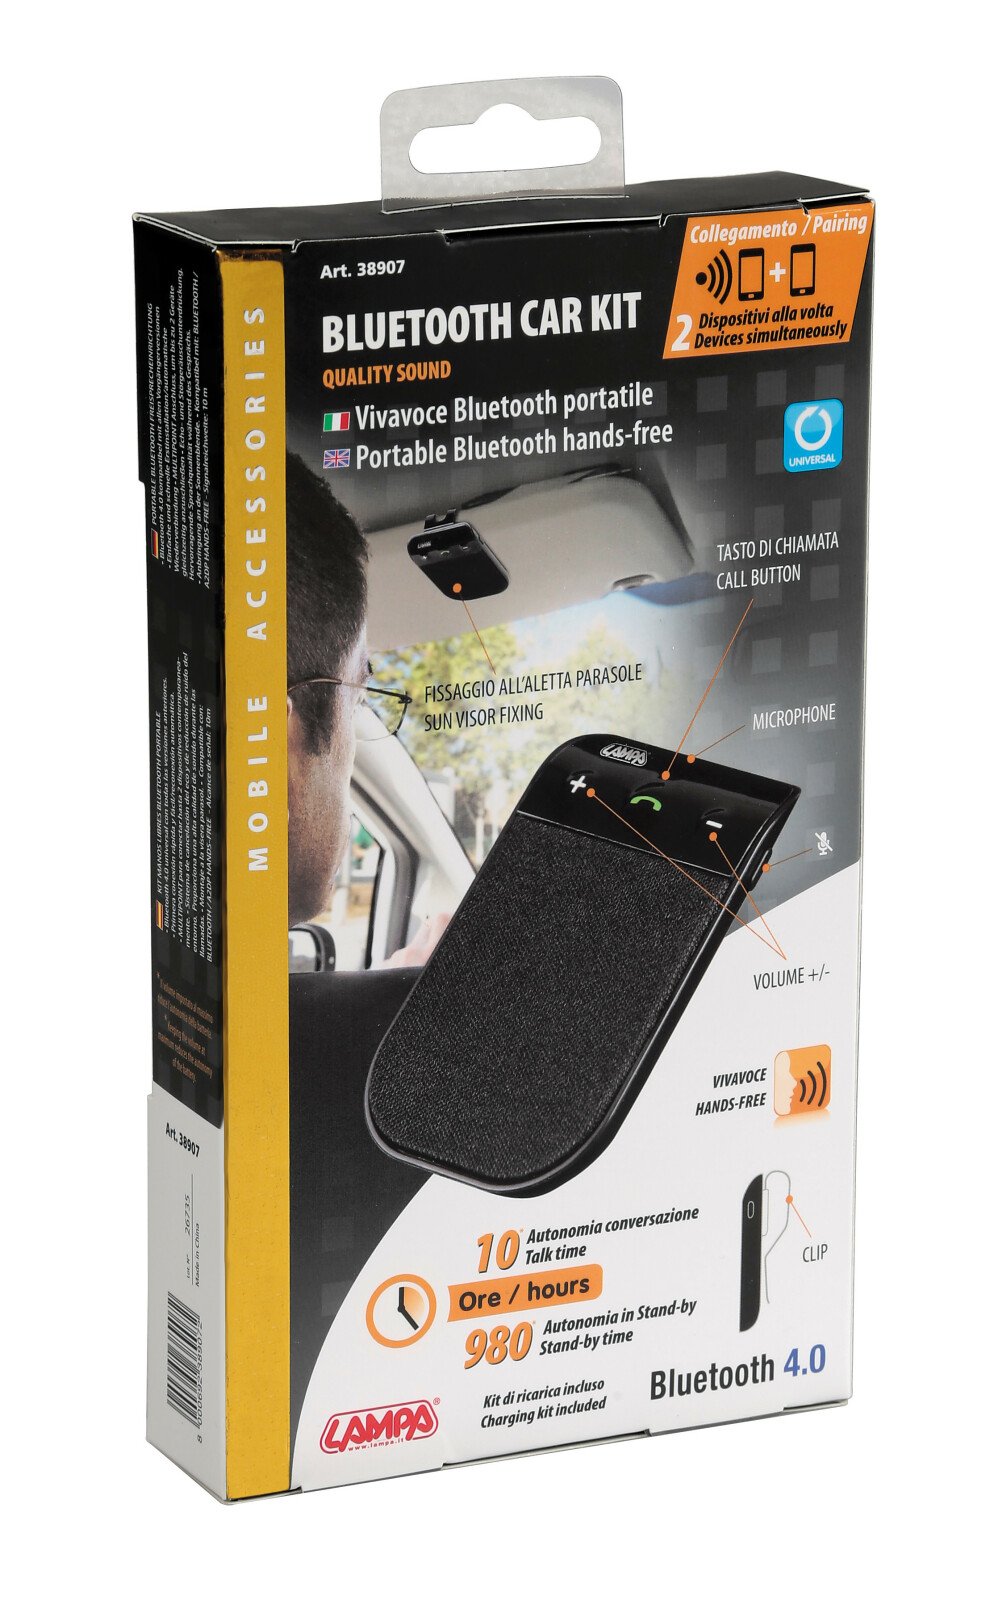 Bluetooth car kit, portable Bluetooth speaker phone kit thumb